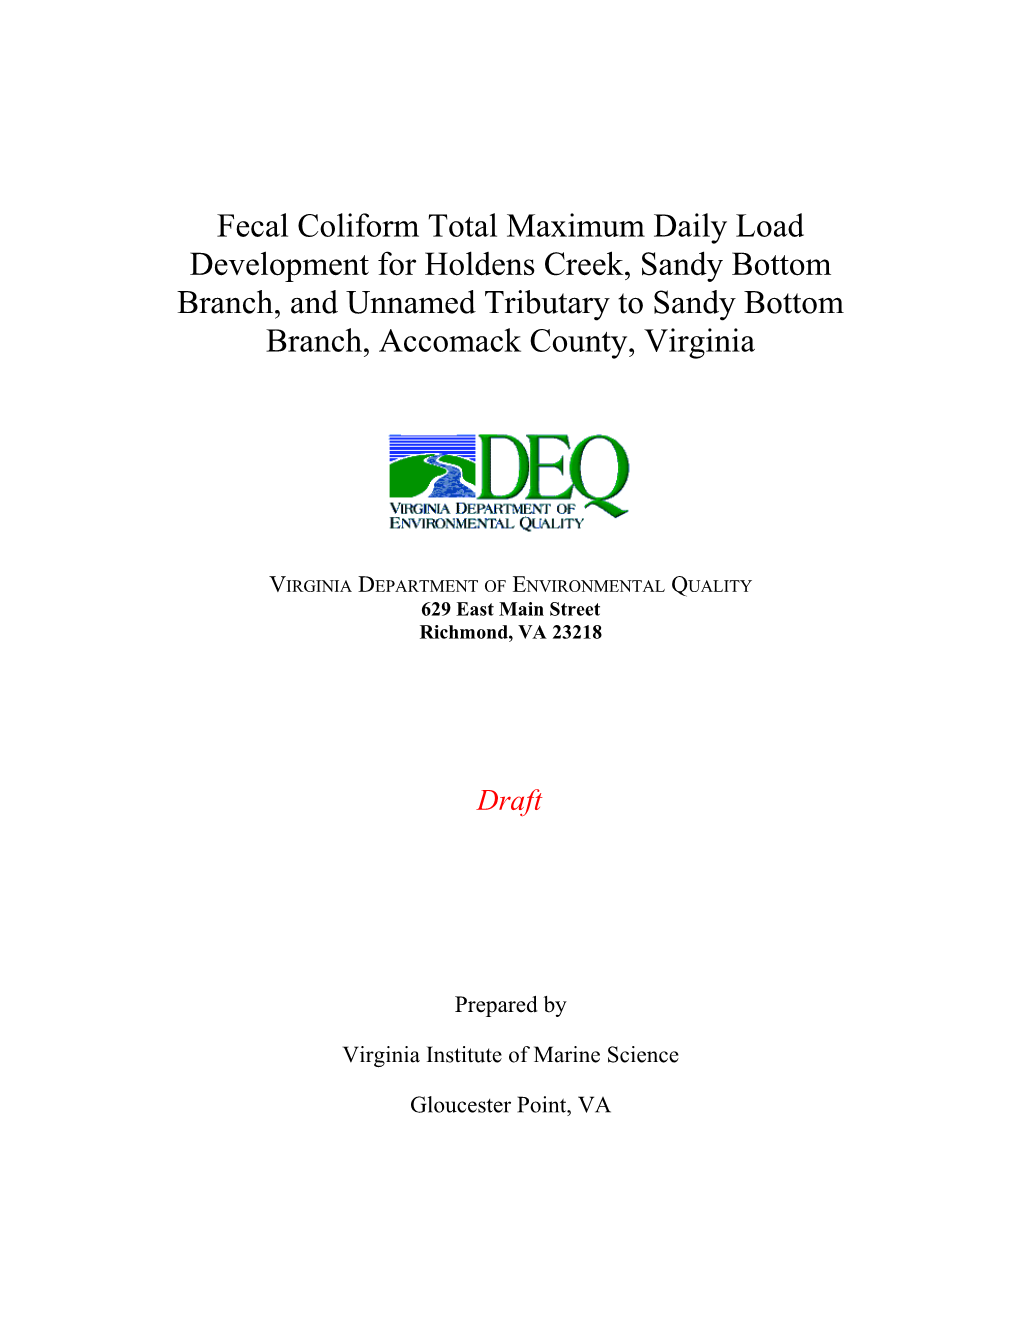 Fecal Coliform Total Maximum Daily Load Development for Pettit Branch, Virginia s1